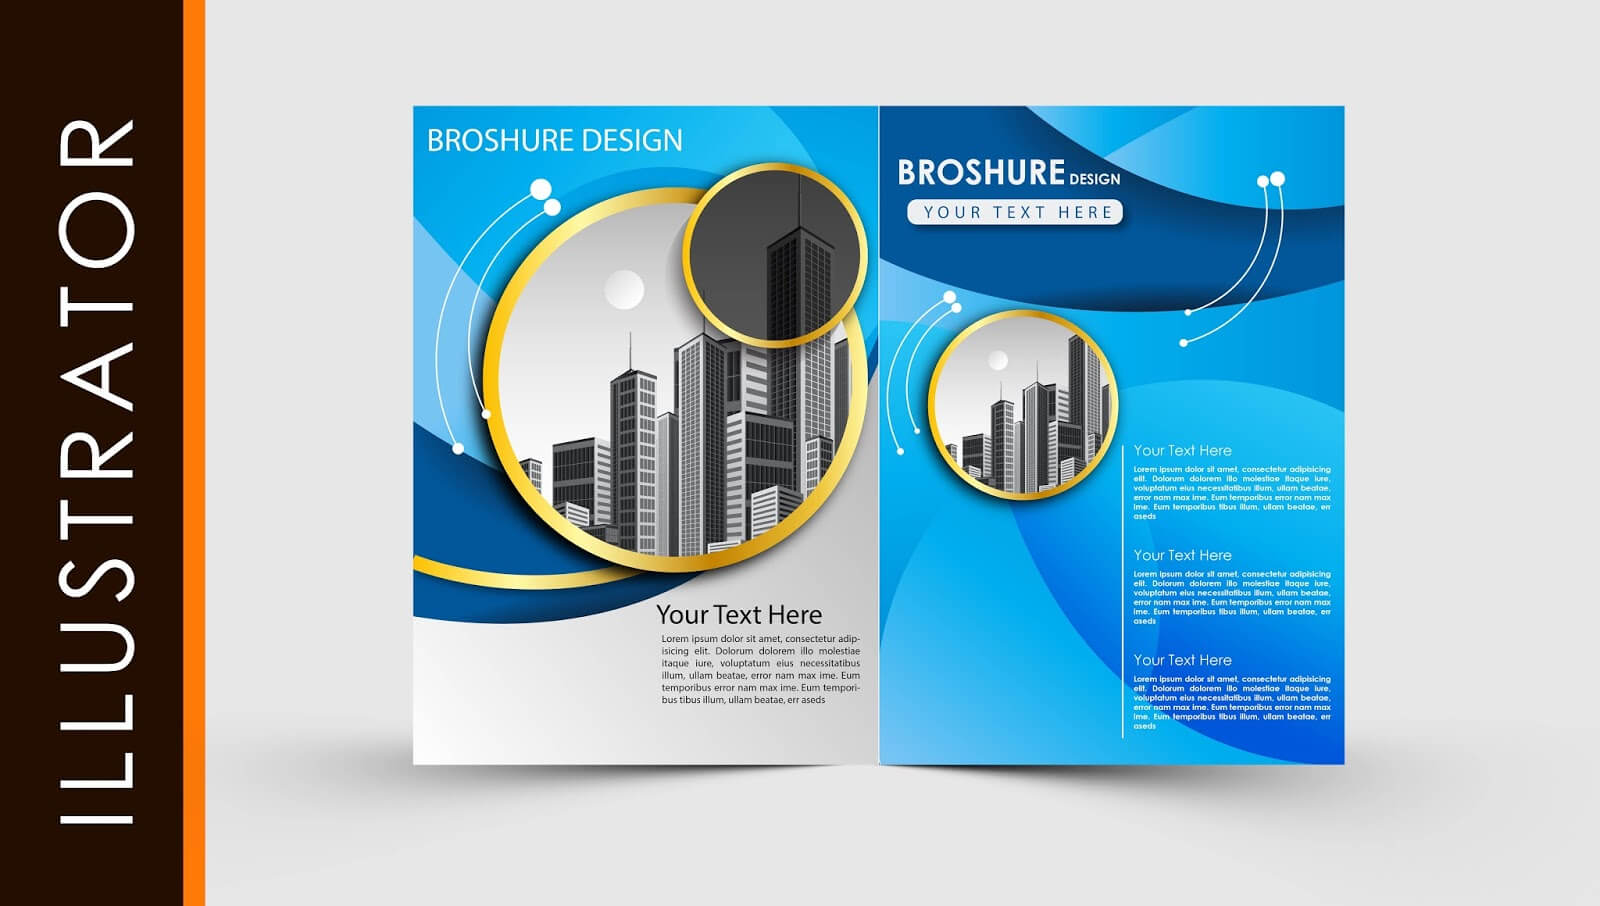 Free Download Adobe Illustrator Template Brochure Two Fold For Adobe Illustrator Brochure Templates Free Download